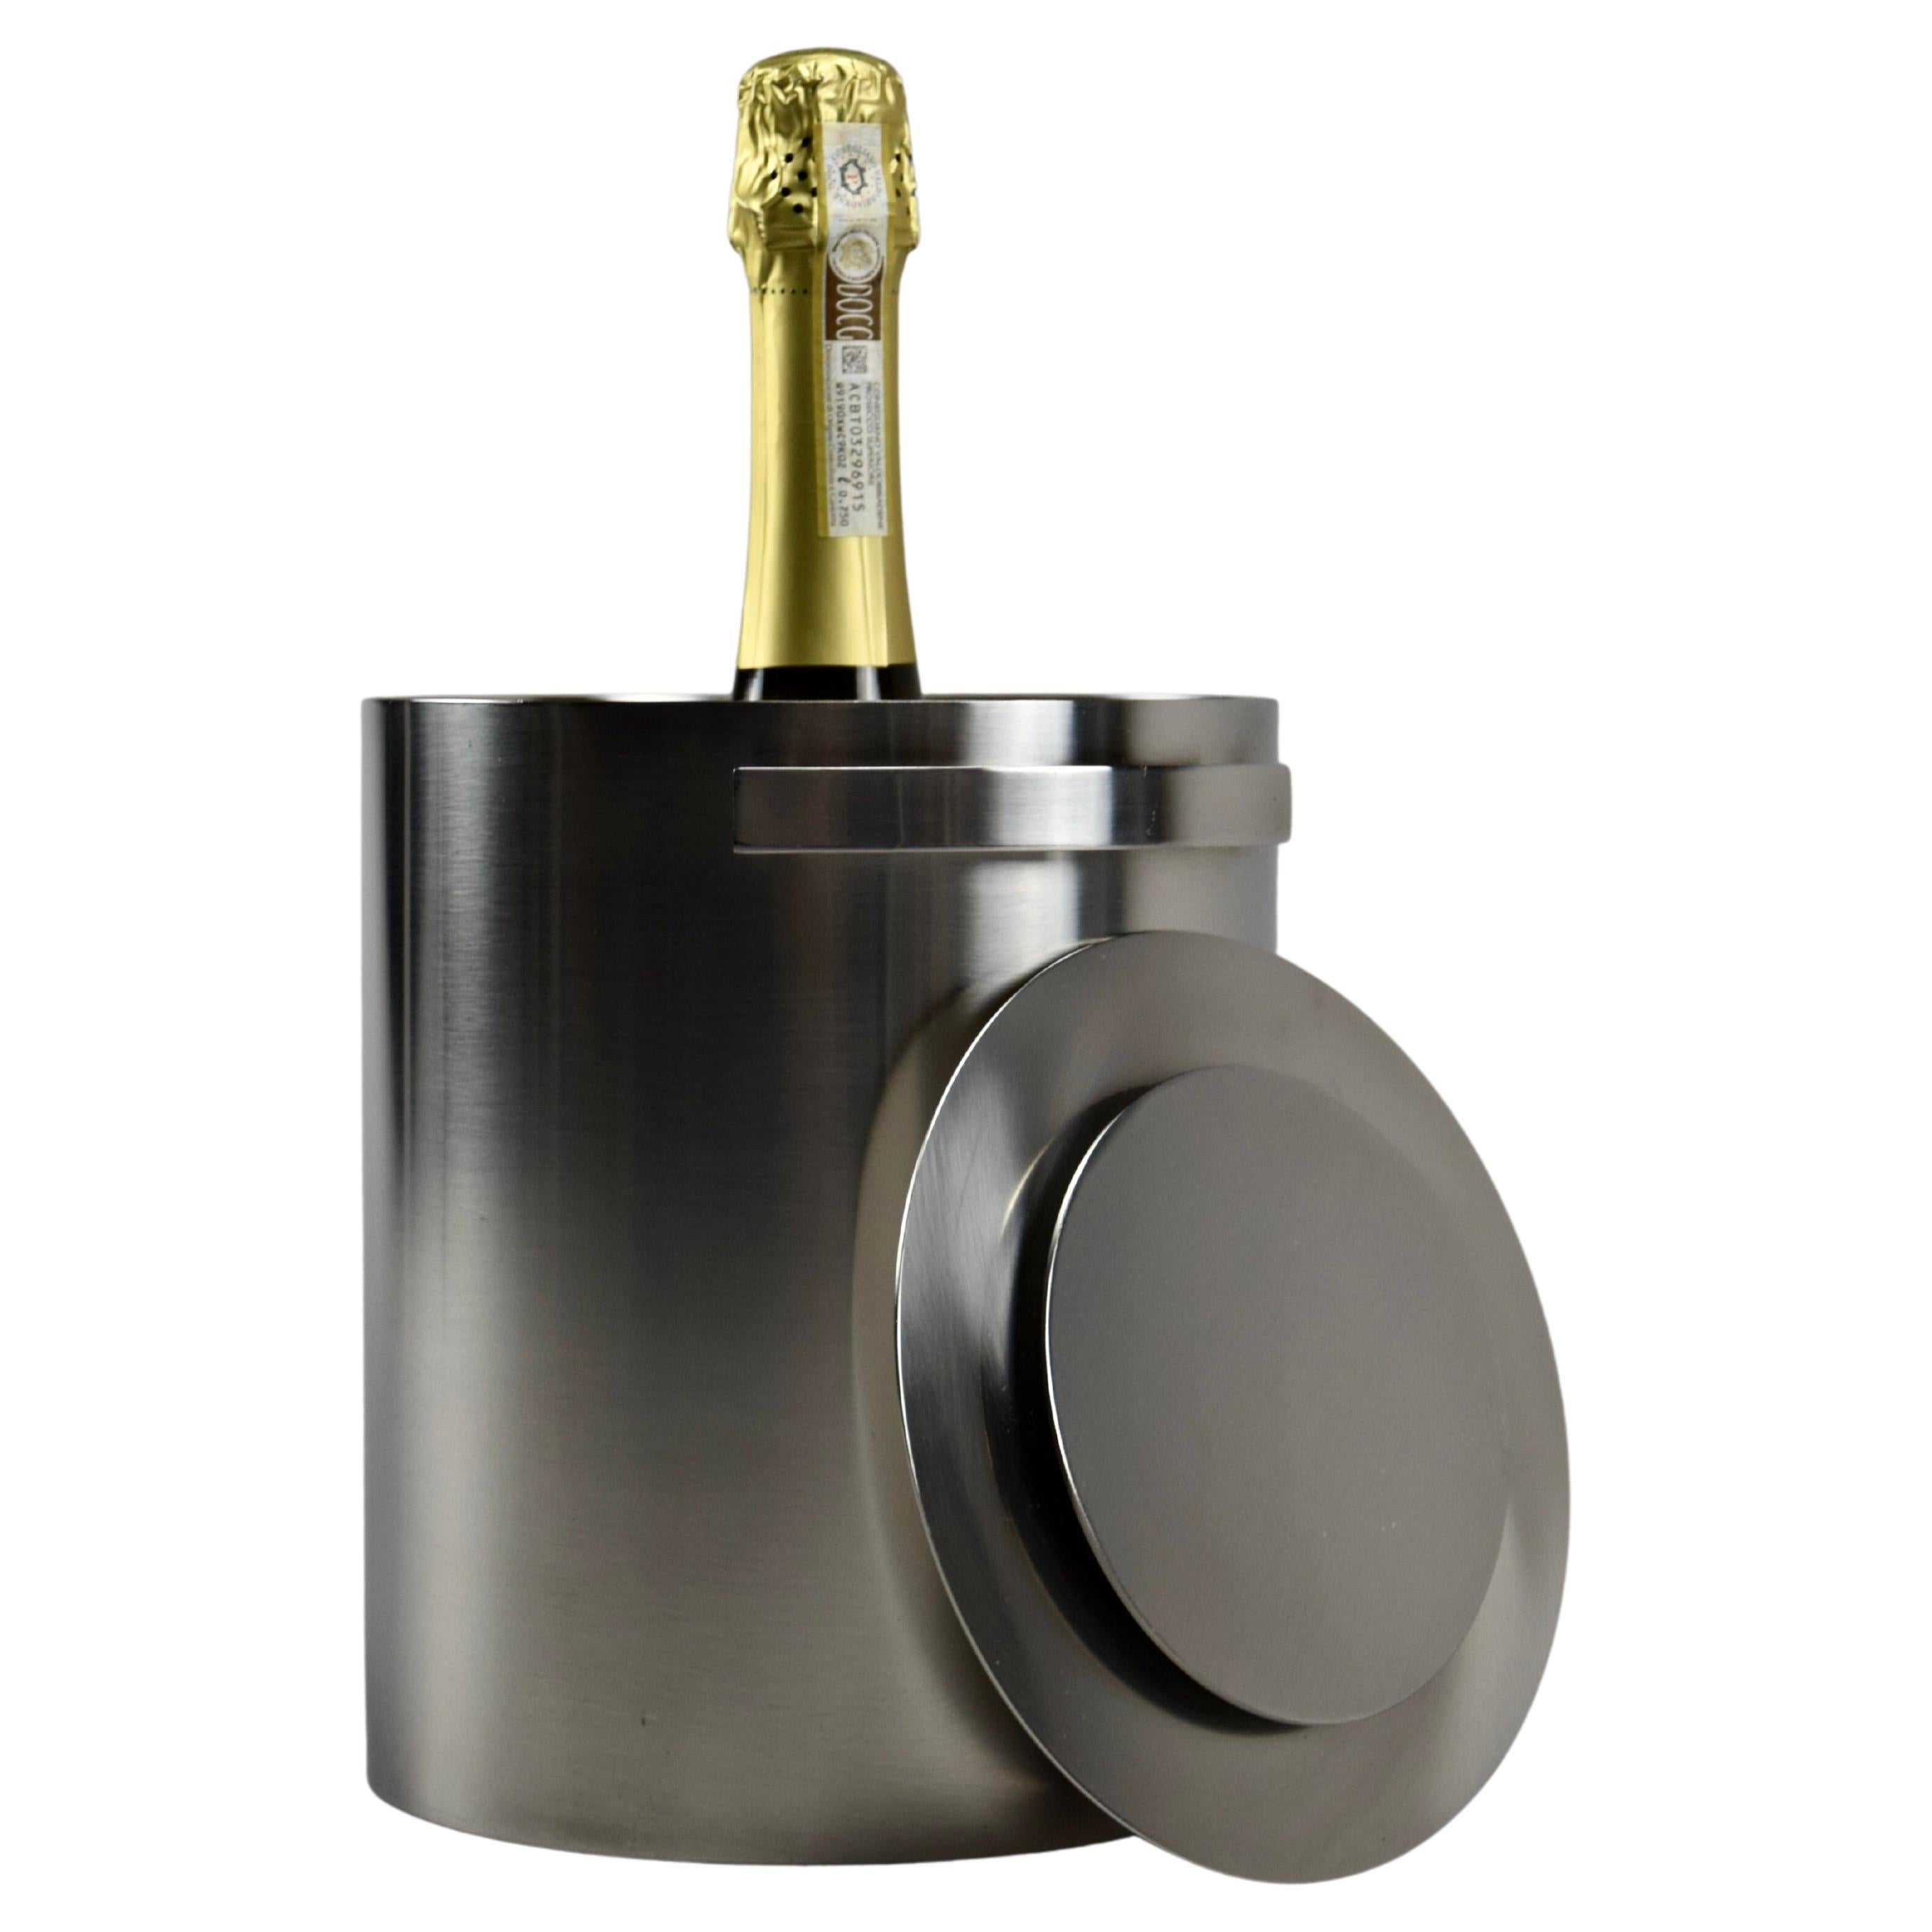 Arne Jacobsen Mid Century Modern Modern Champagne Cooler